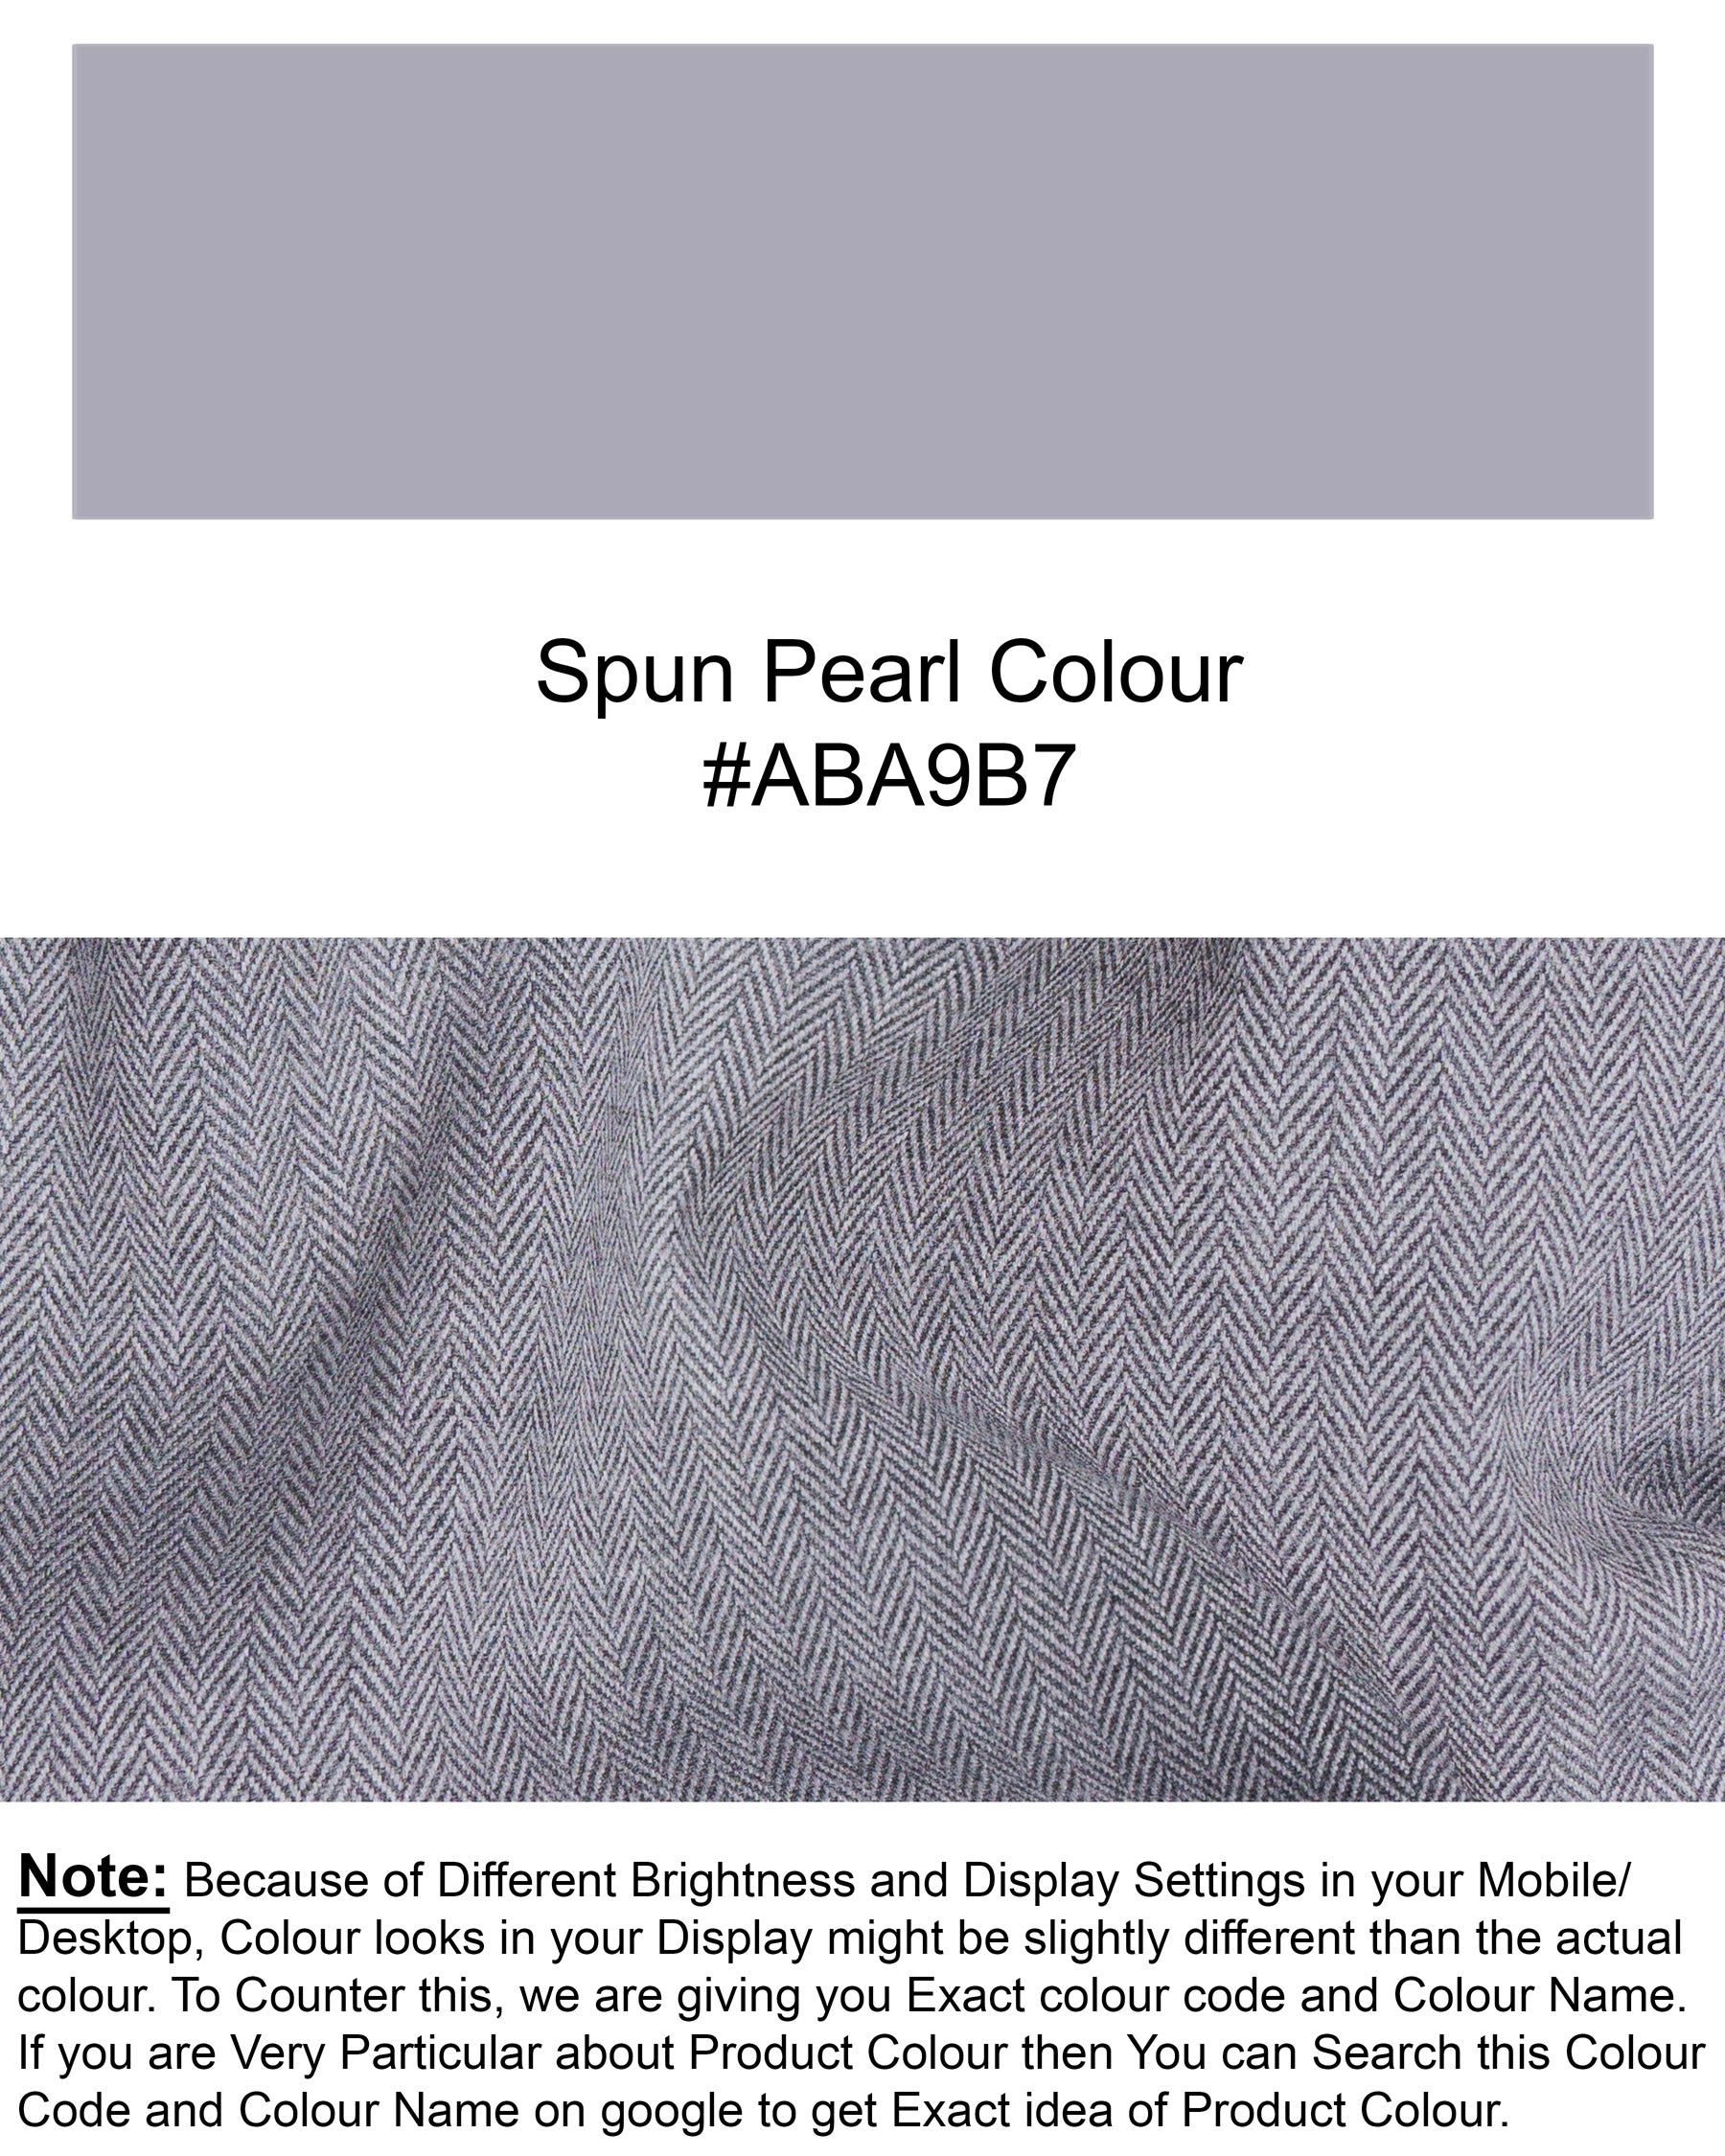 Spun Pearl Grey Herringbone Double-breasted Premium Cotton Sports Blazer BL1435-DB-PP-36,BL1435-DB-PP-38,BL1435-DB-PP-40,BL1435-DB-PP-42,BL1435-DB-PP-44,BL1435-DB-PP-46,BL1435-DB-PP-48,BL1435-DB-PP-50,BL1435-DB-PP-52,BL1435-DB-PP-54,BL1435-DB-PP-56,BL1435-DB-PP-58,BL1435-DB-PP-60